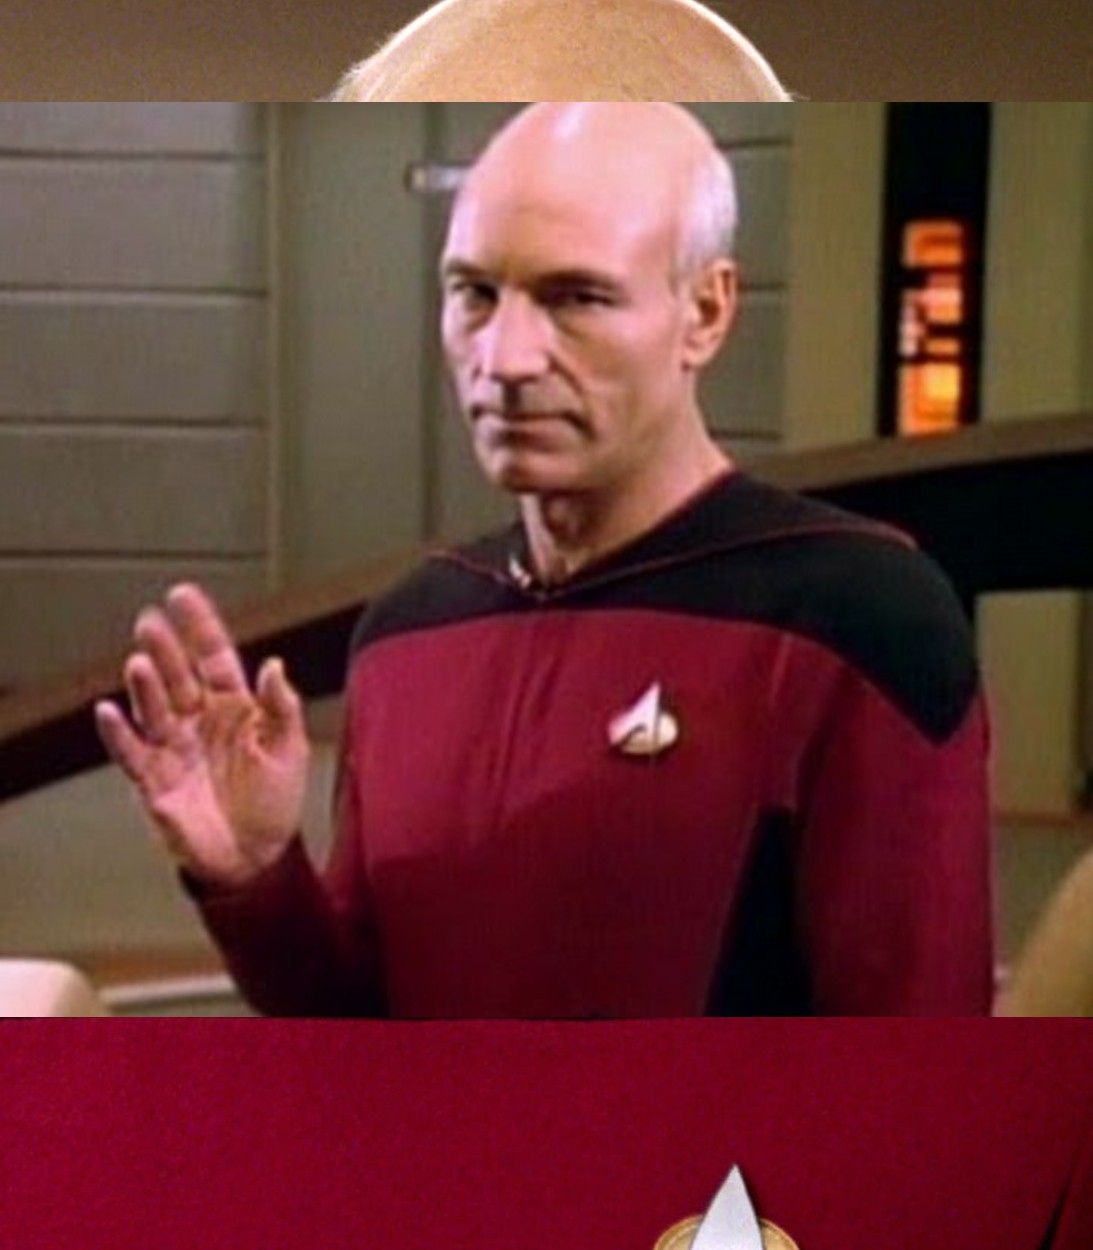 Picard awkward waving meme vertical